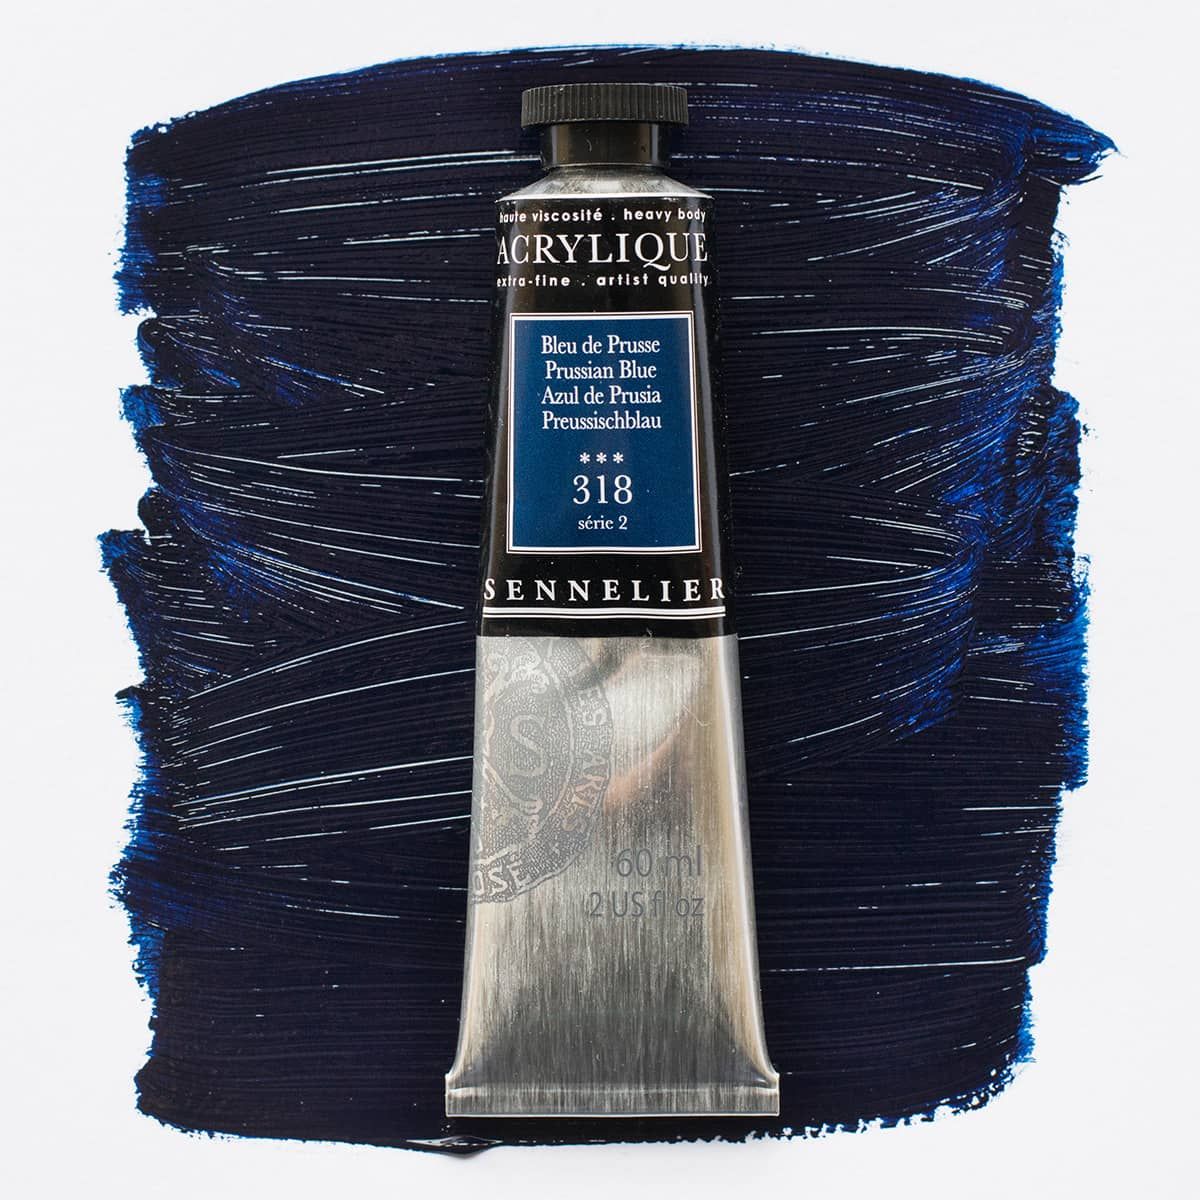 Sennelier Dry Pigment 200ml Prussian Blue 318